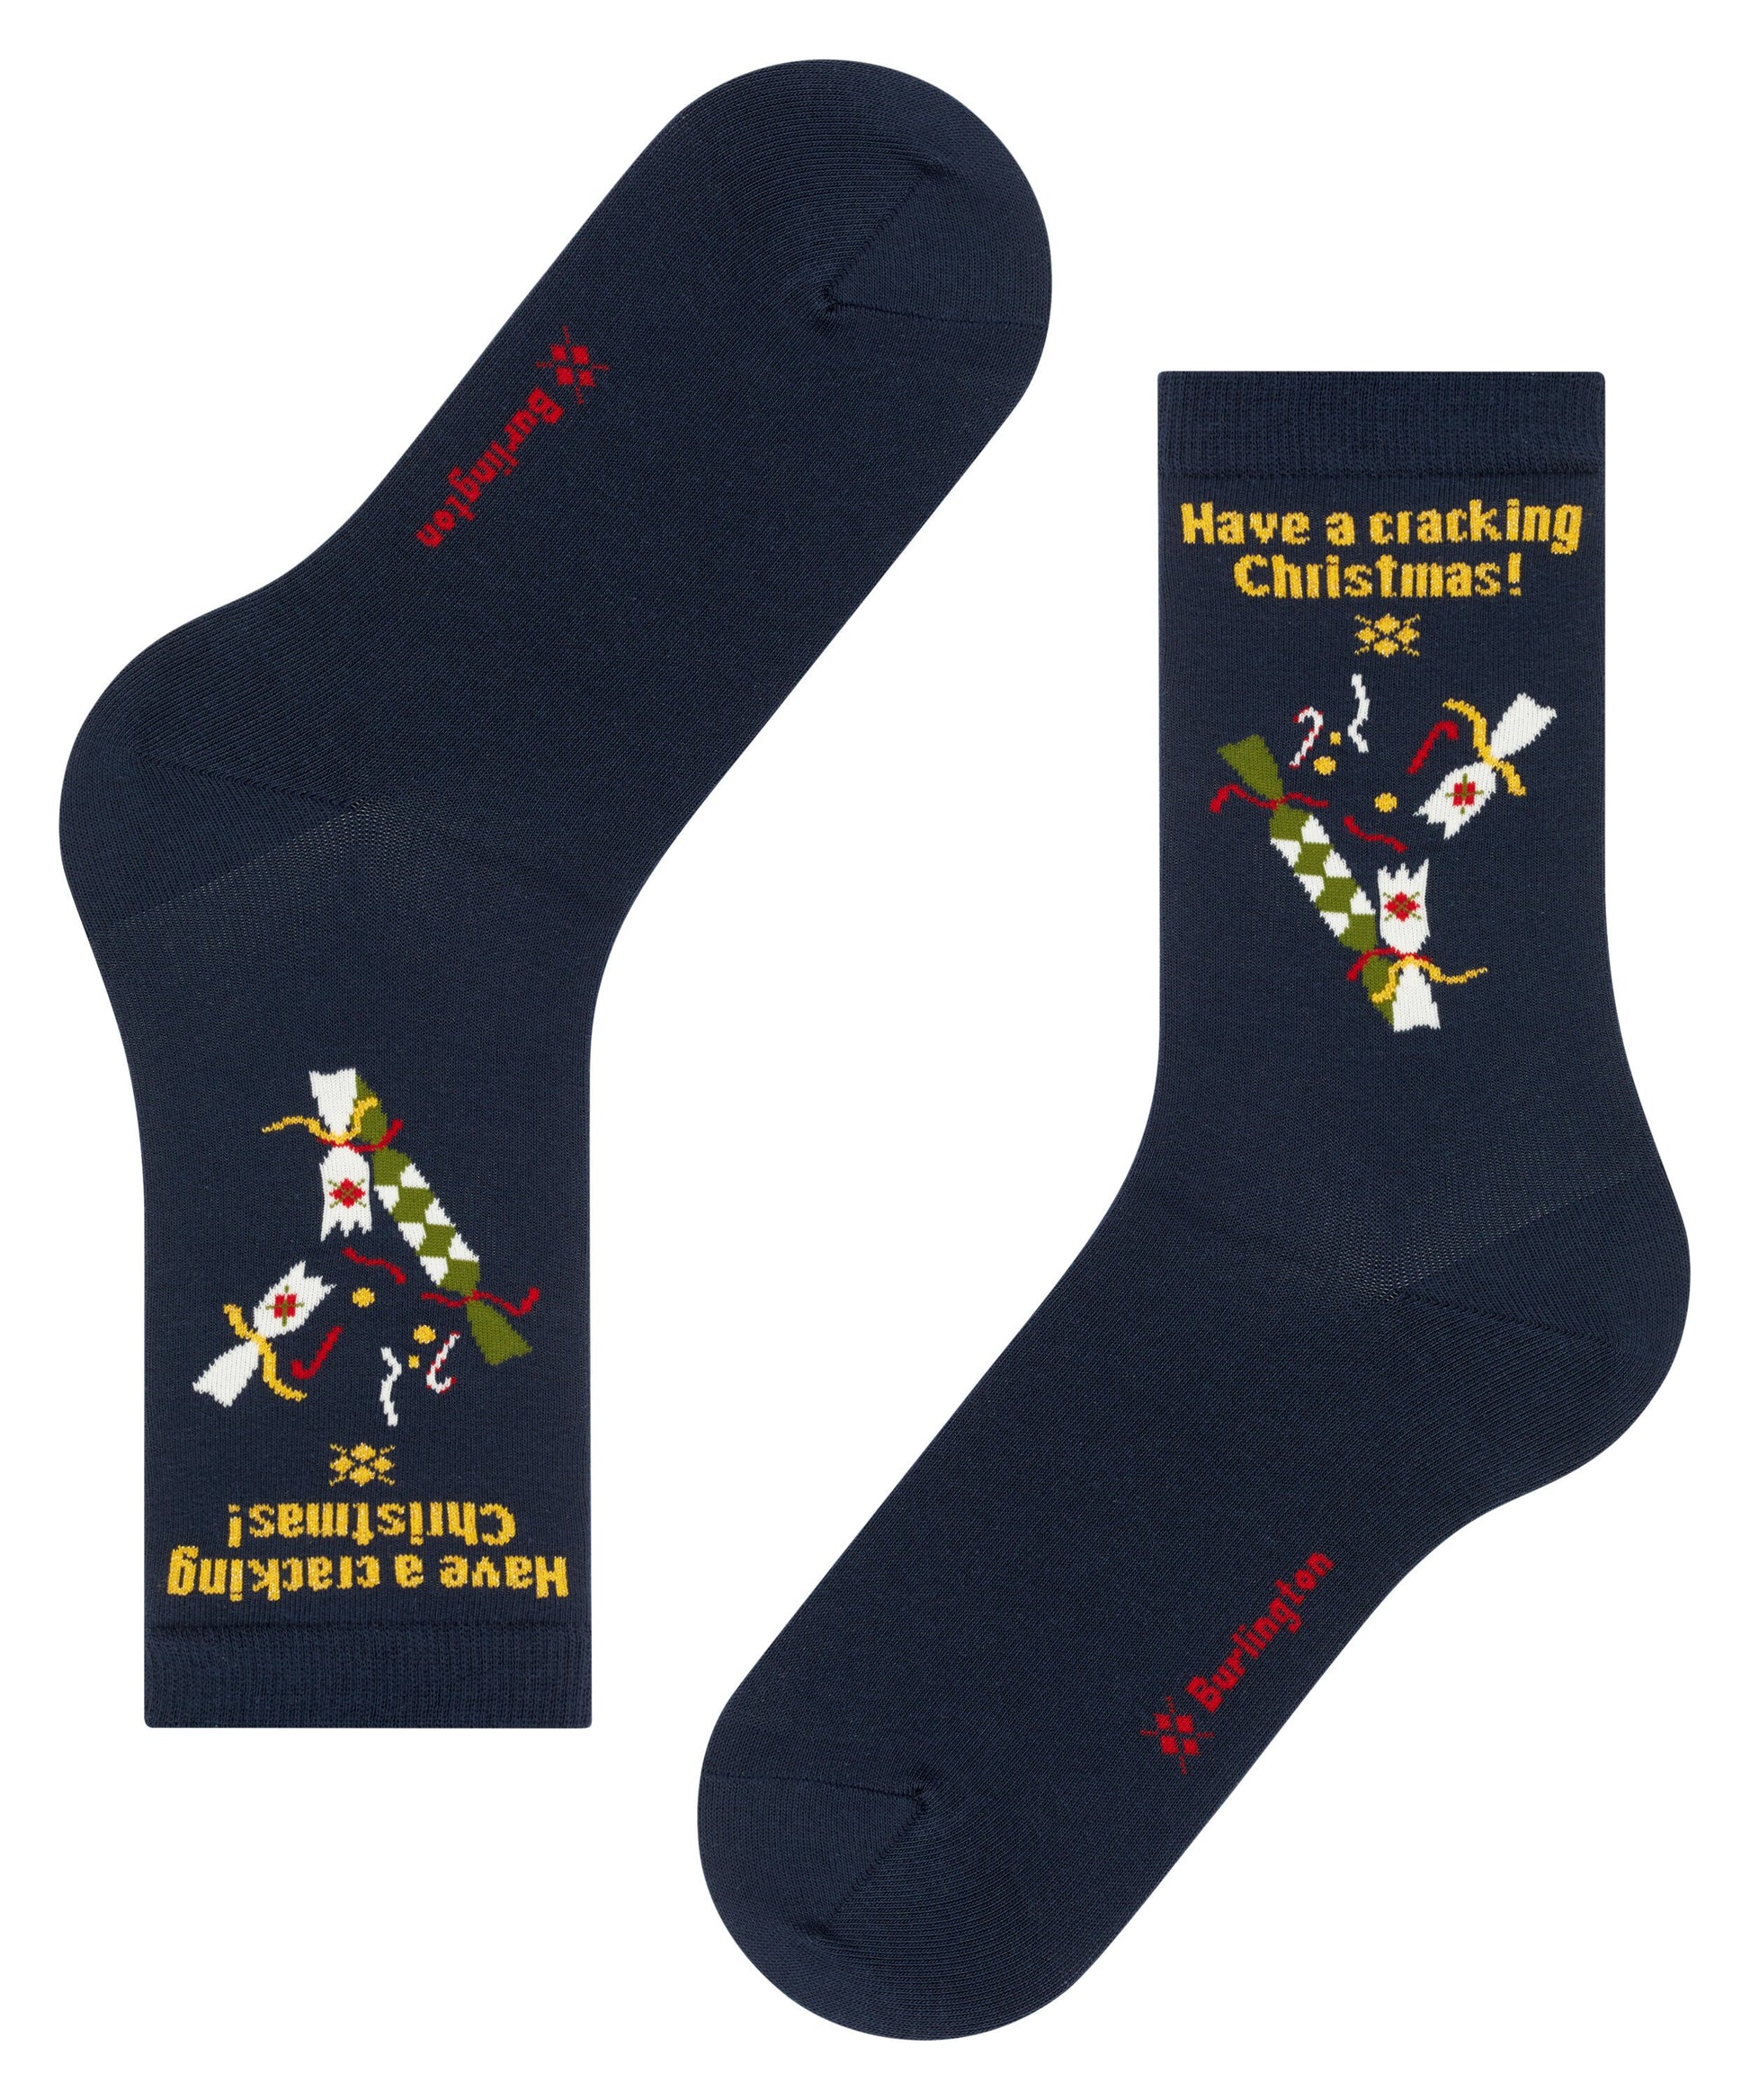 Burlington X-Mas Cracker Damen Socken (Marine)